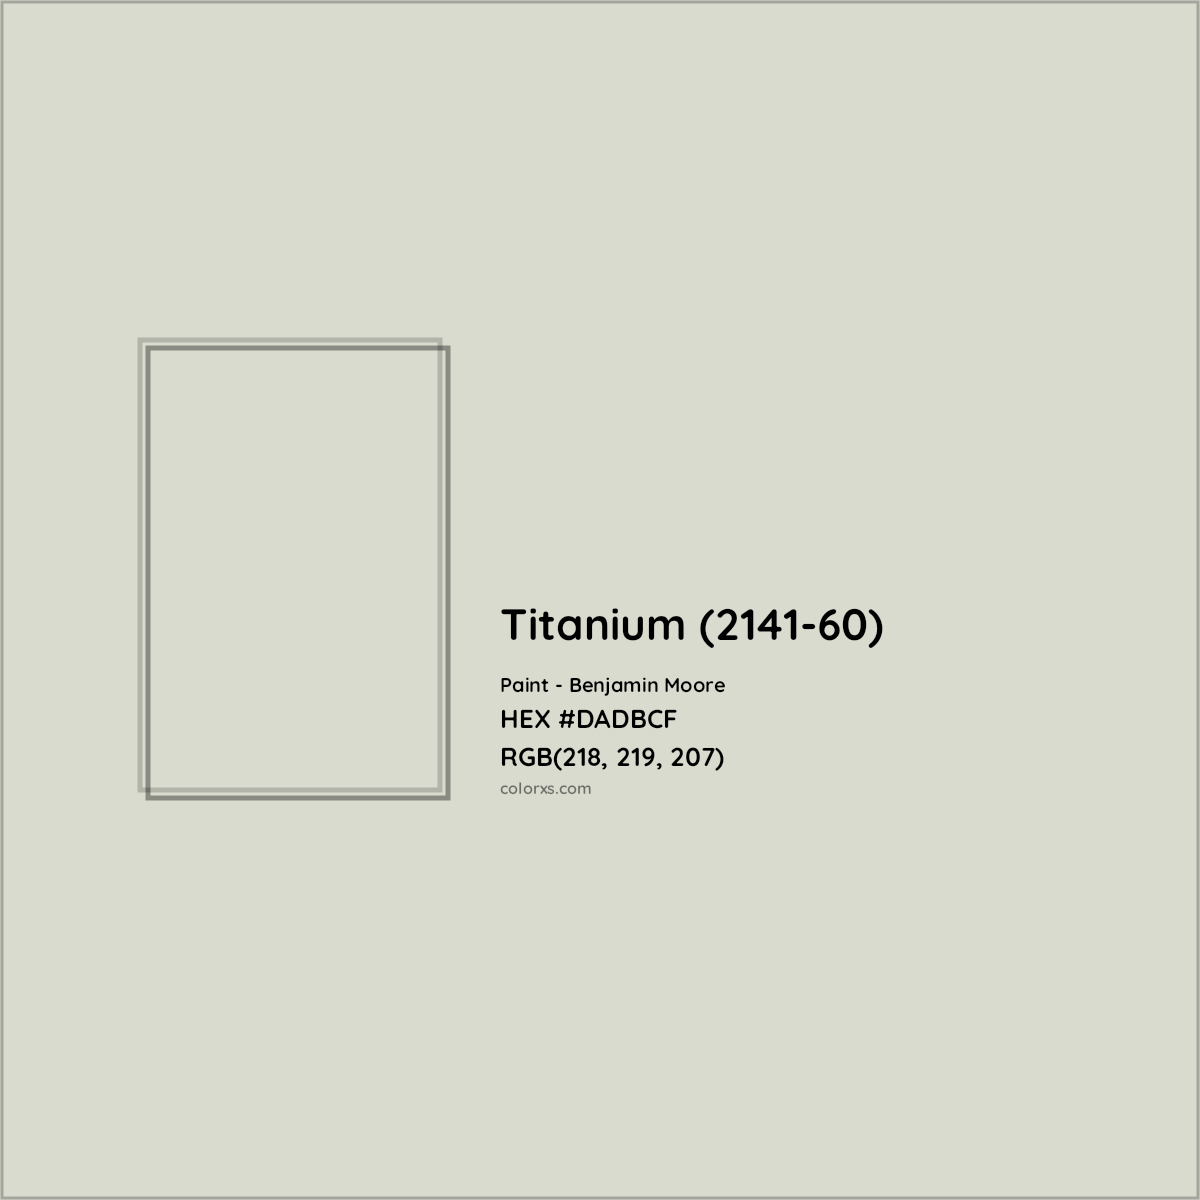 HEX #DADBCF Titanium (2141-60) Paint Benjamin Moore - Color Code